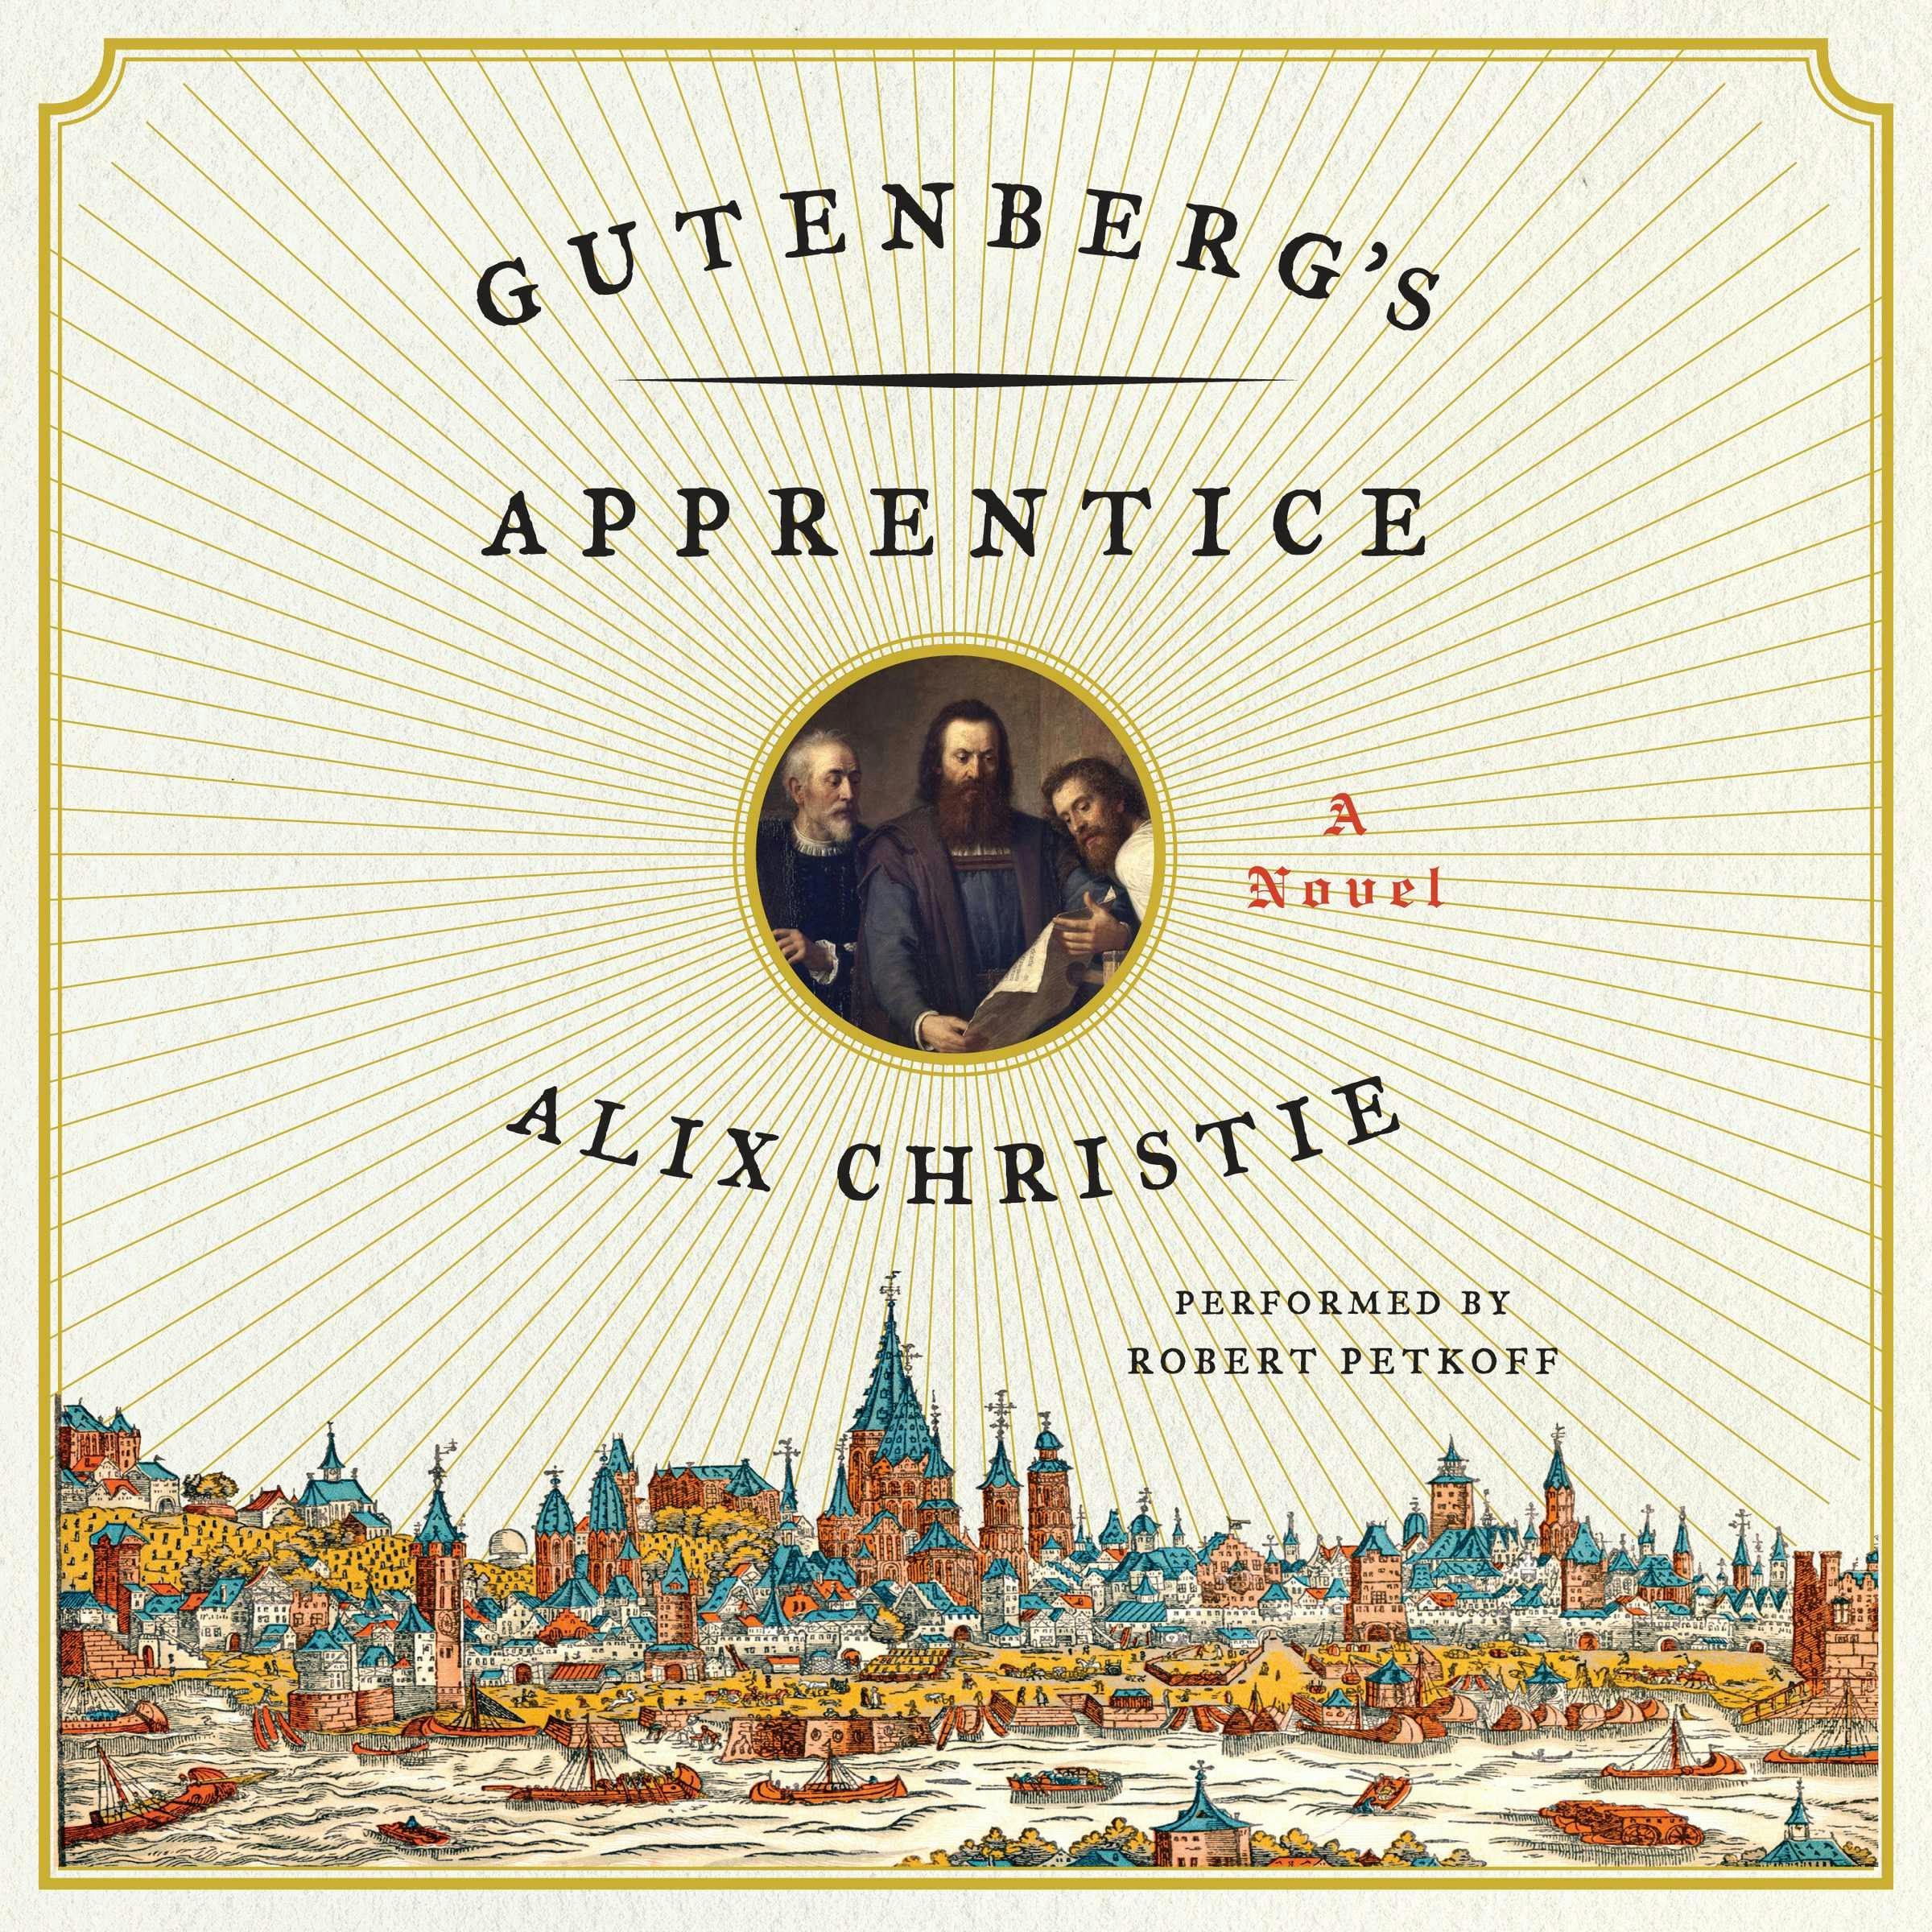 Gutenberg's Apprentice: A Novel - Alix Christie